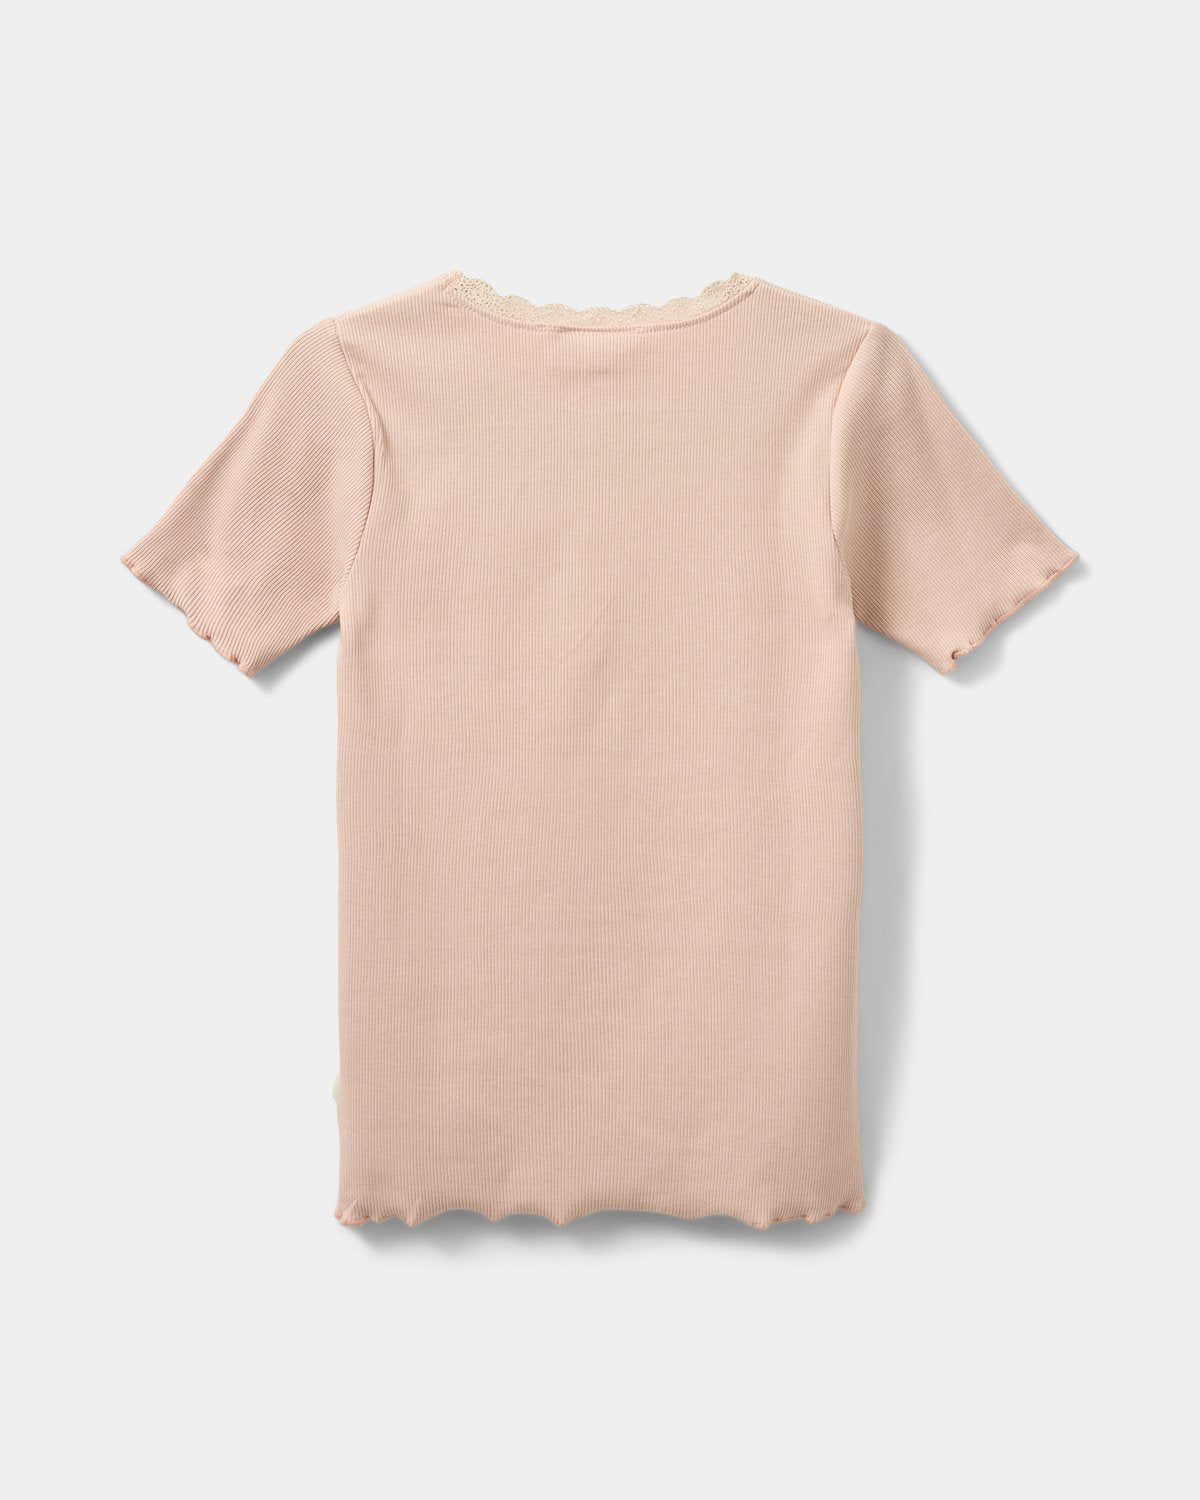 P242407-T-shirt-Light rose